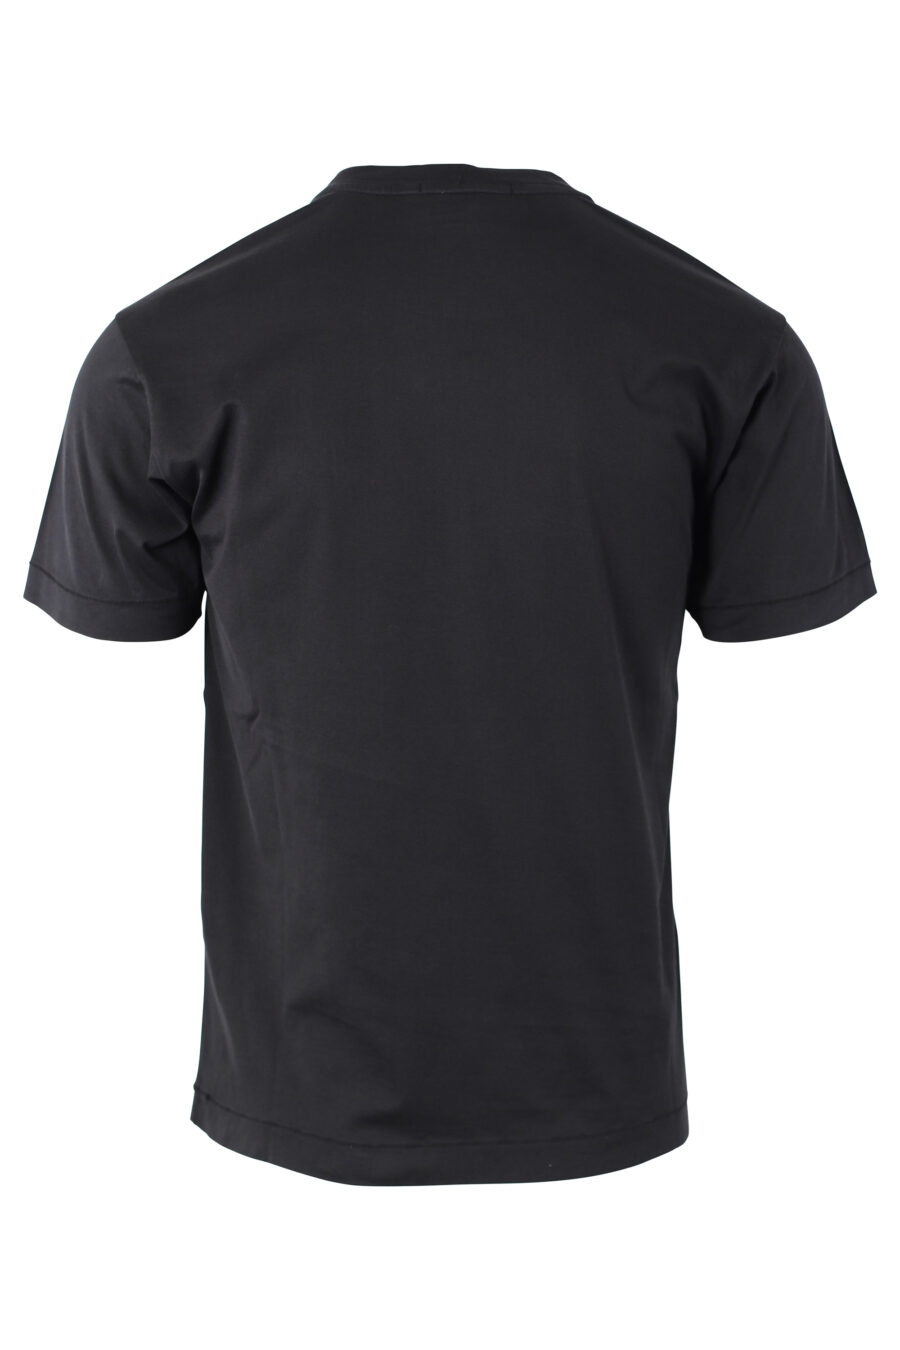 Camiseta negra con minilogo parche - IMG 1134